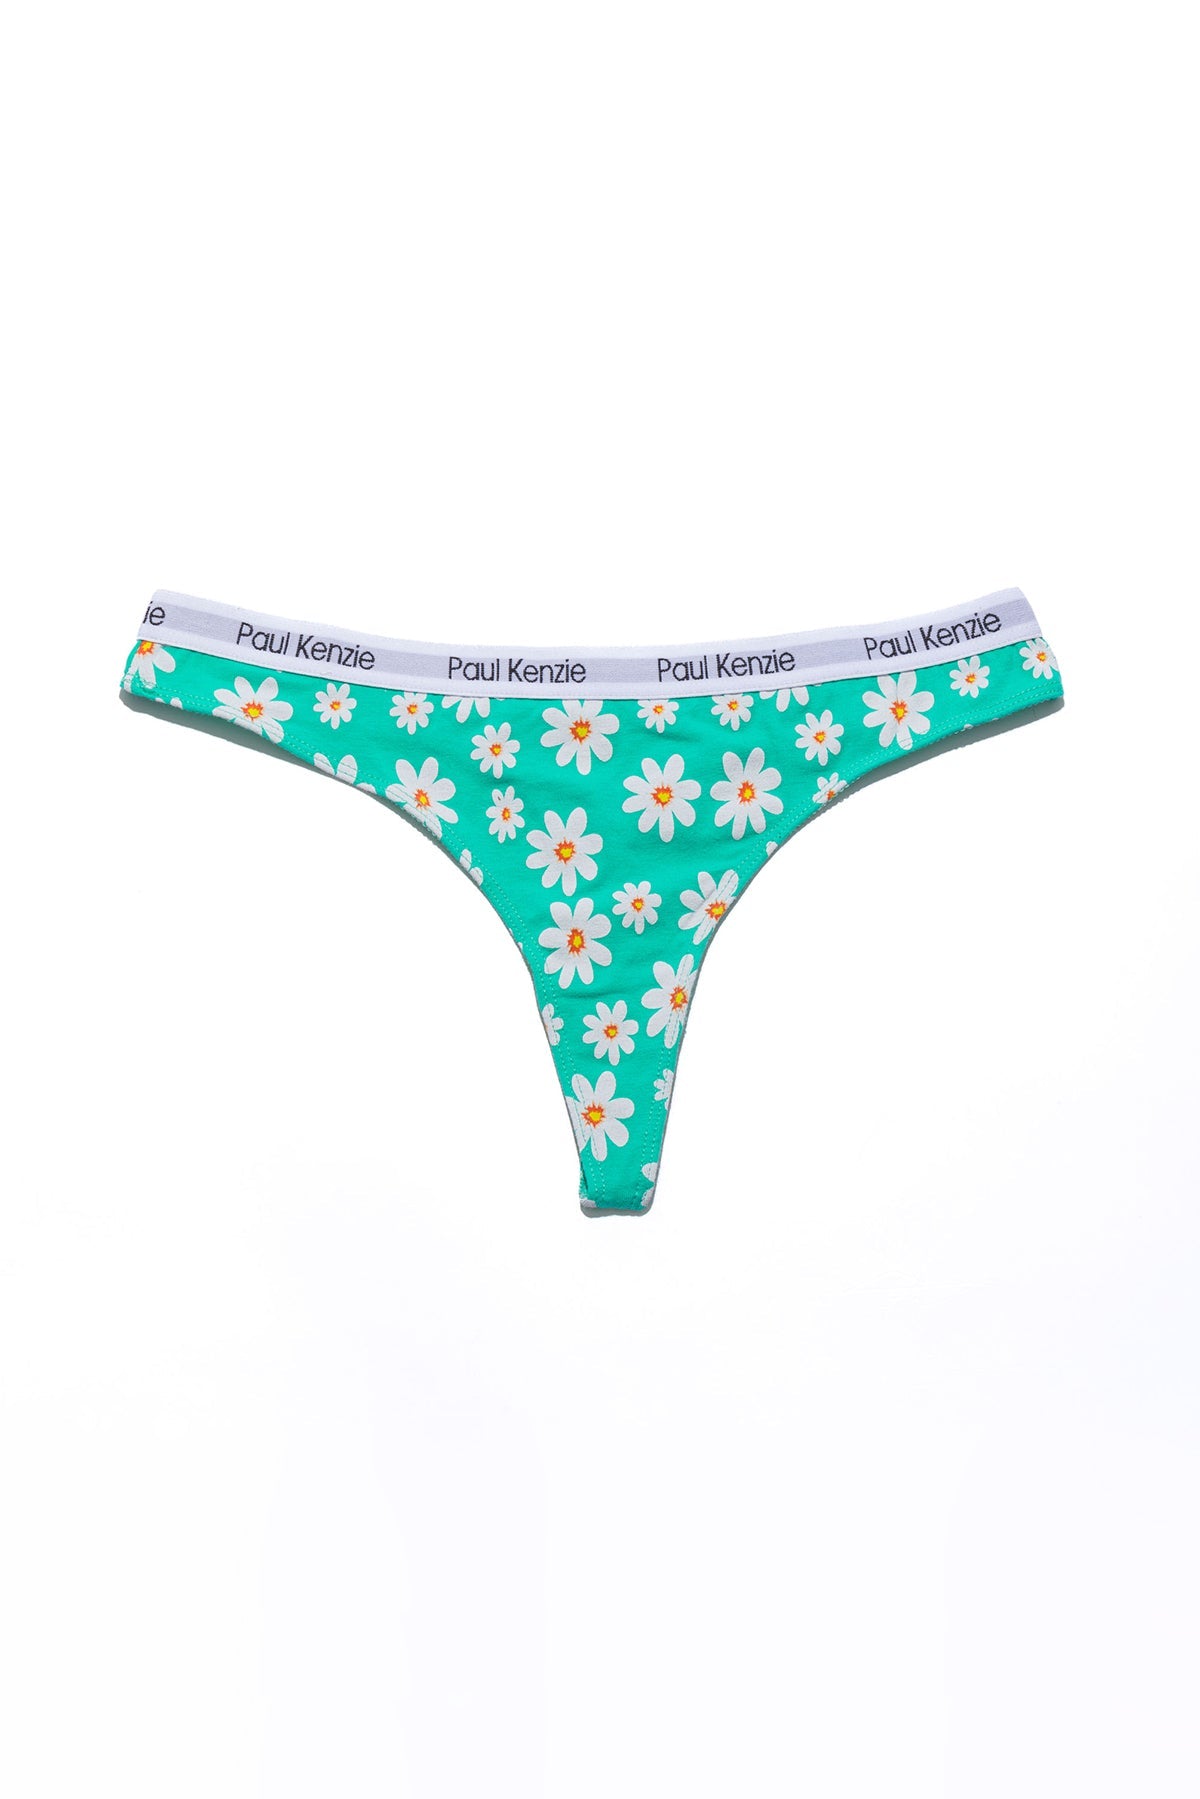 Buy Custom Name Matching Couples: Bikini Thong Underwear Online at